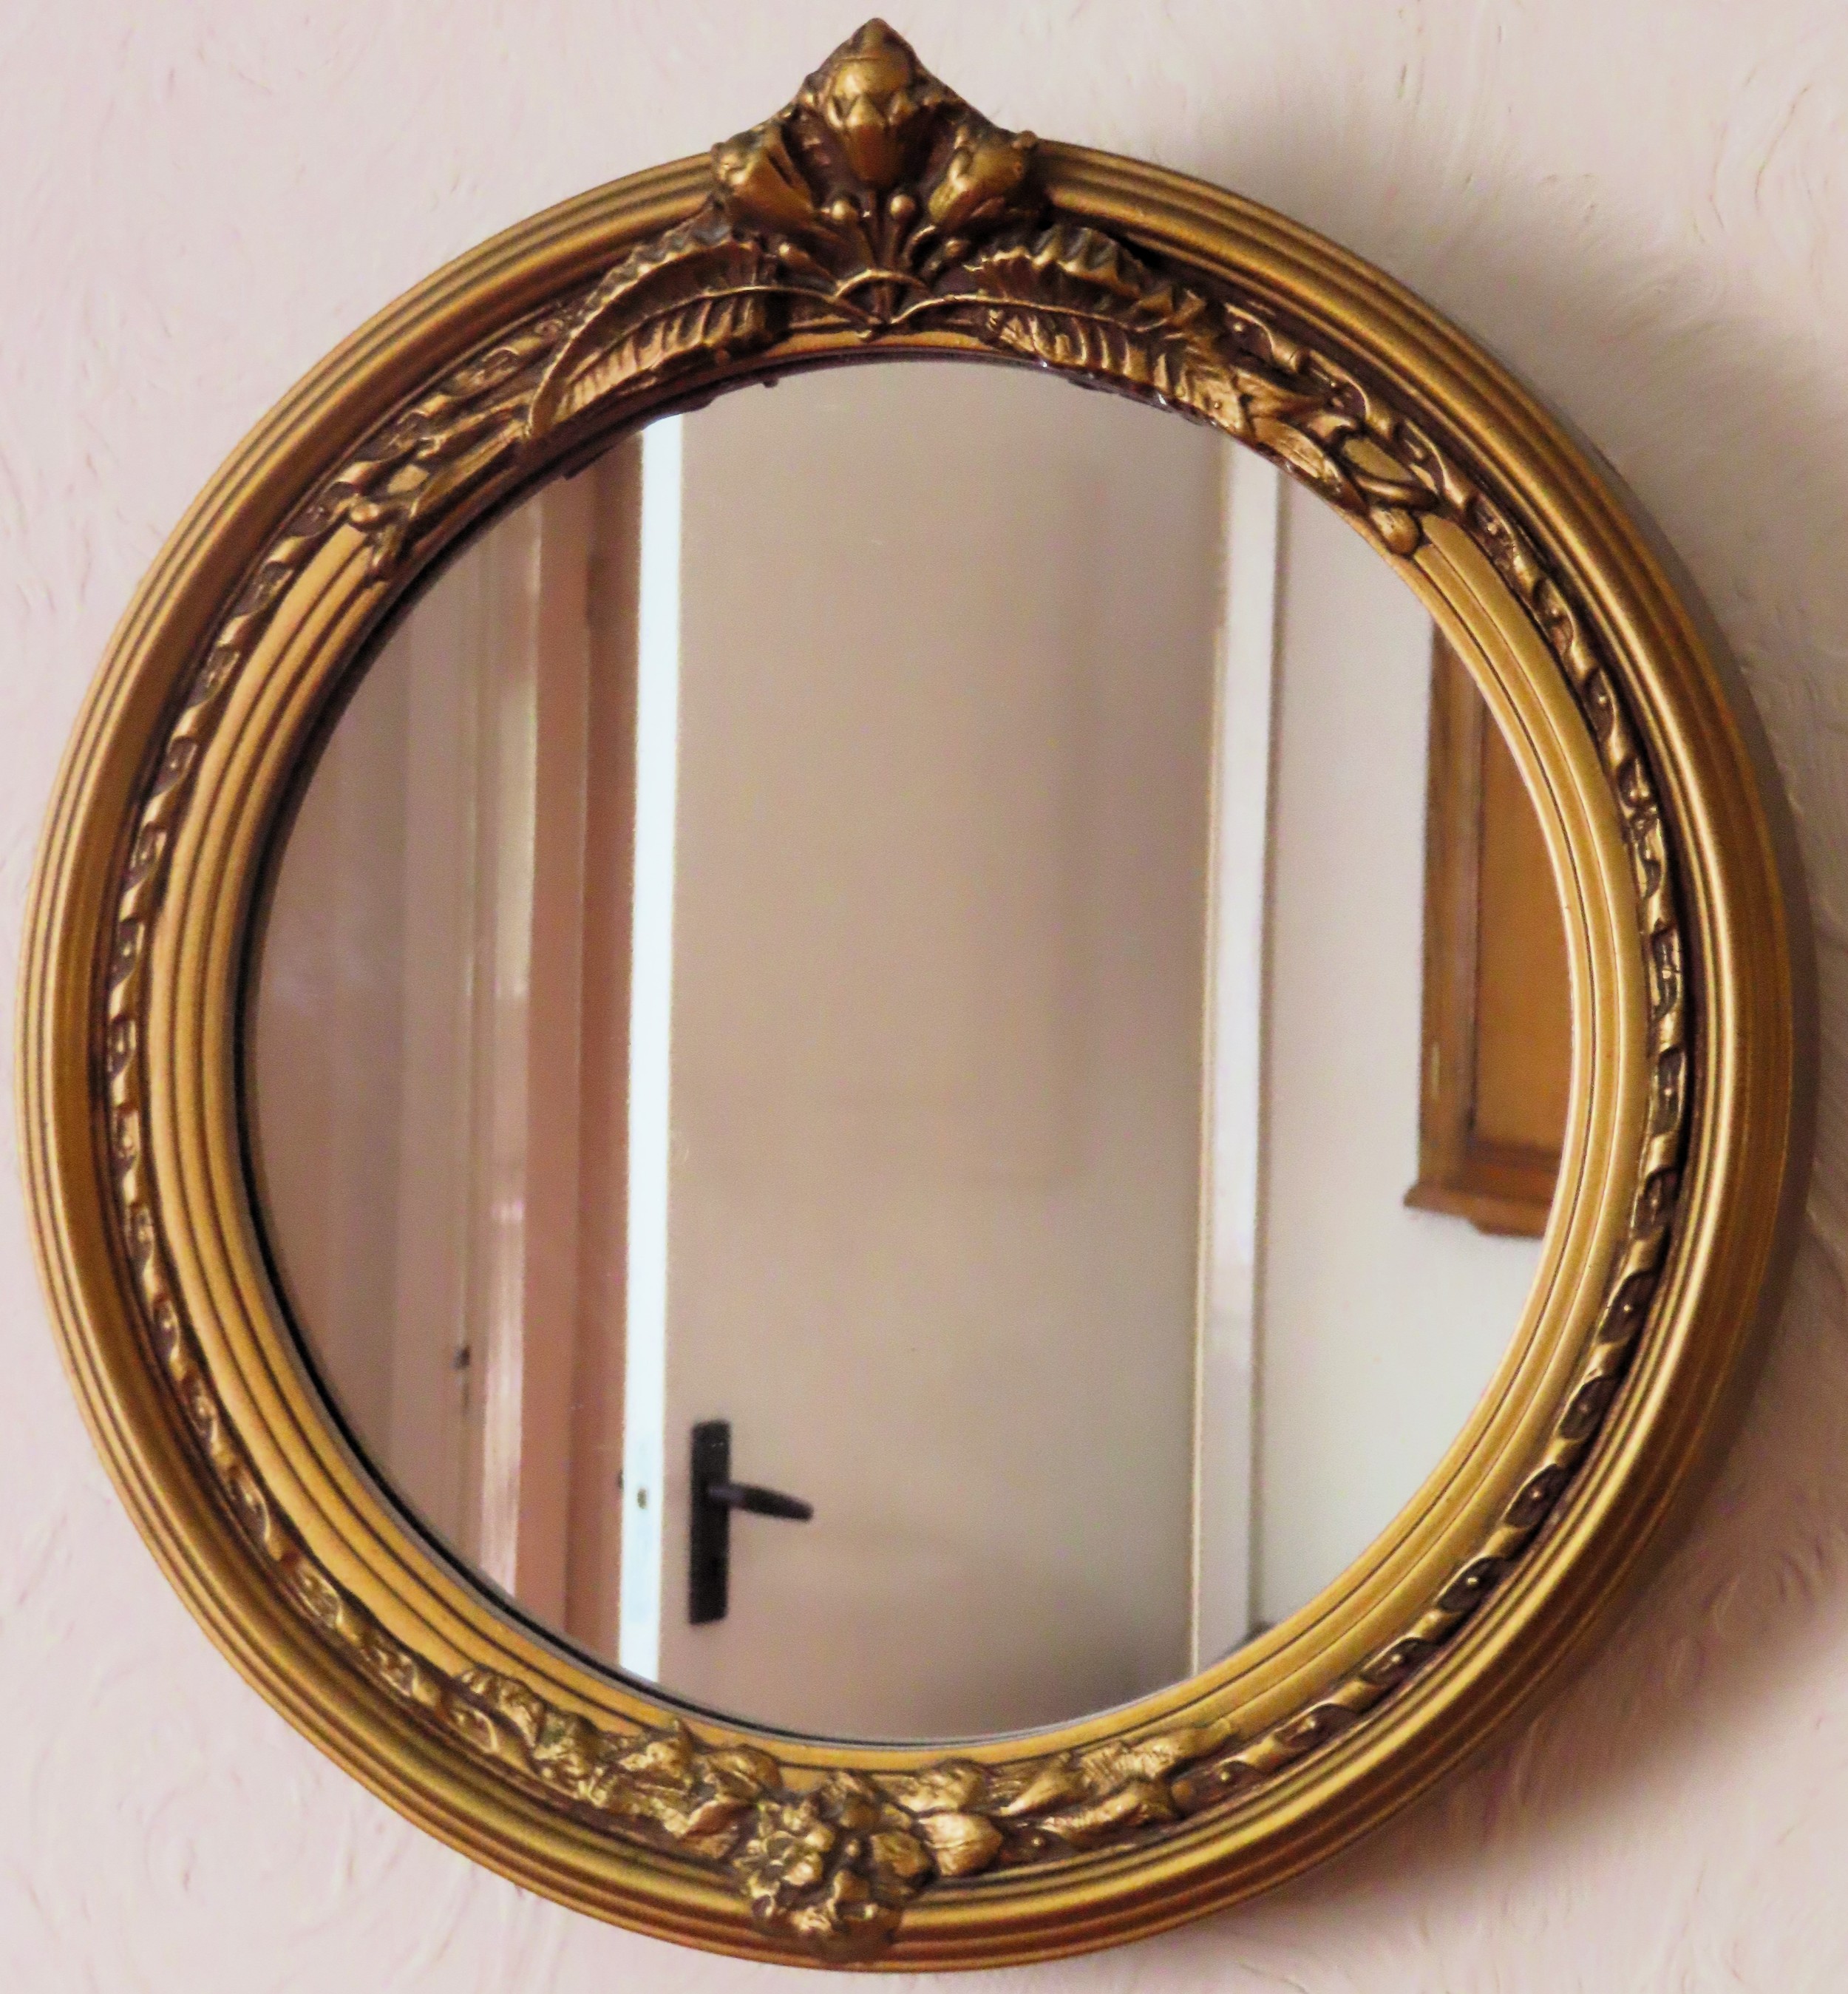 20th century gilded framed wall mirror. Approx. 32 x 31cm